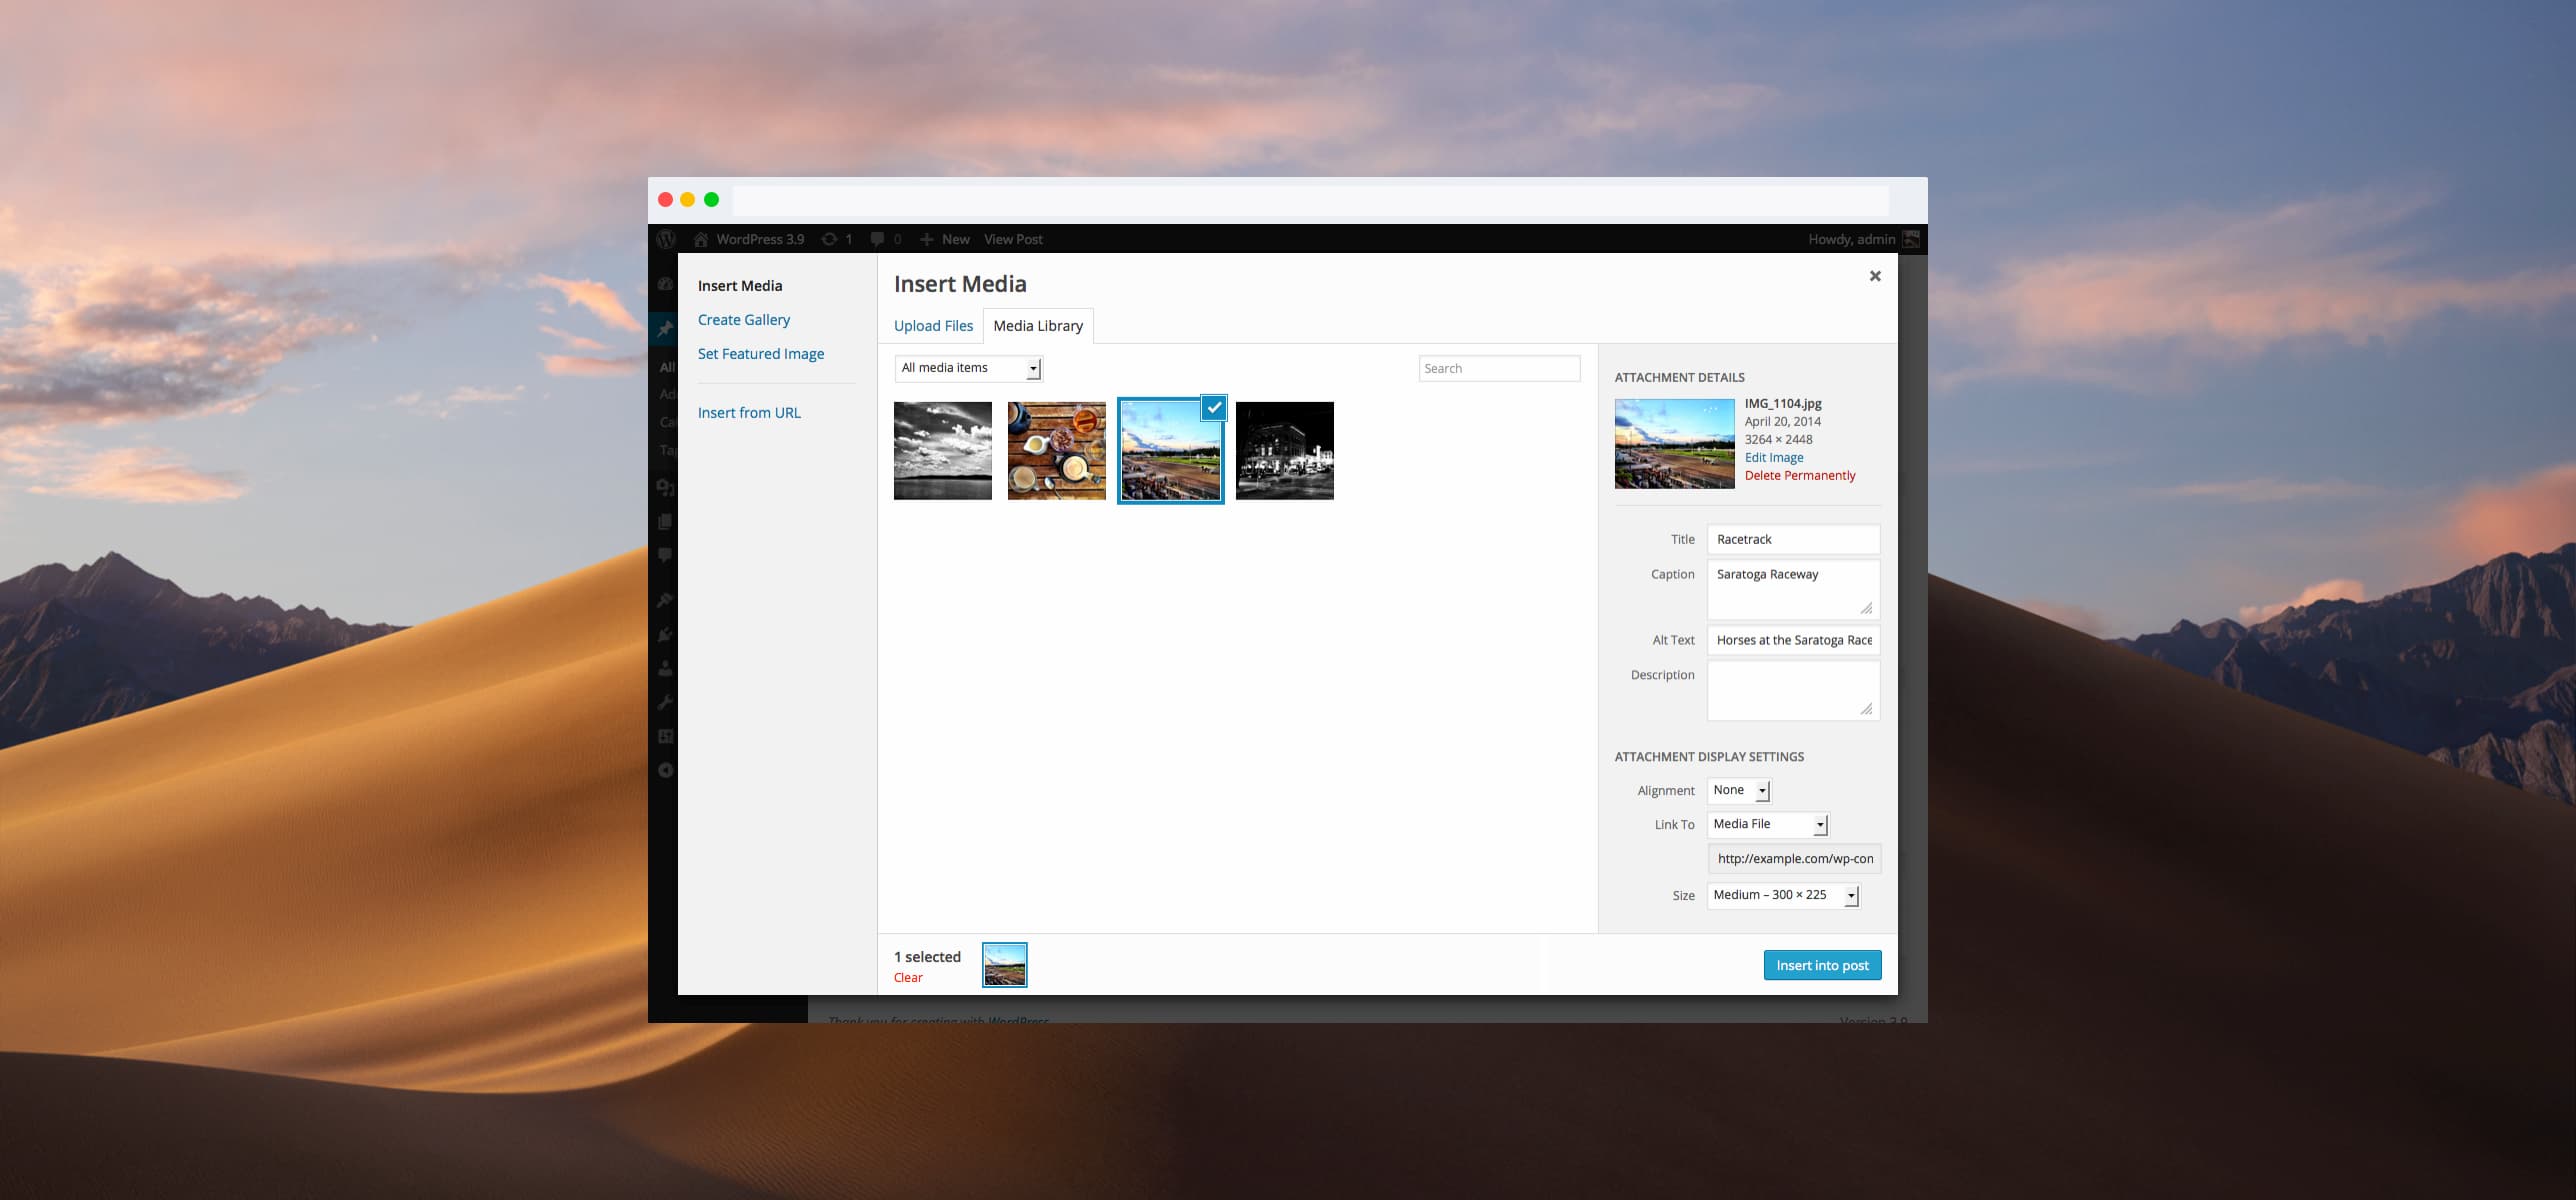 Screenshot of Wordpress admin interface showing media gallery